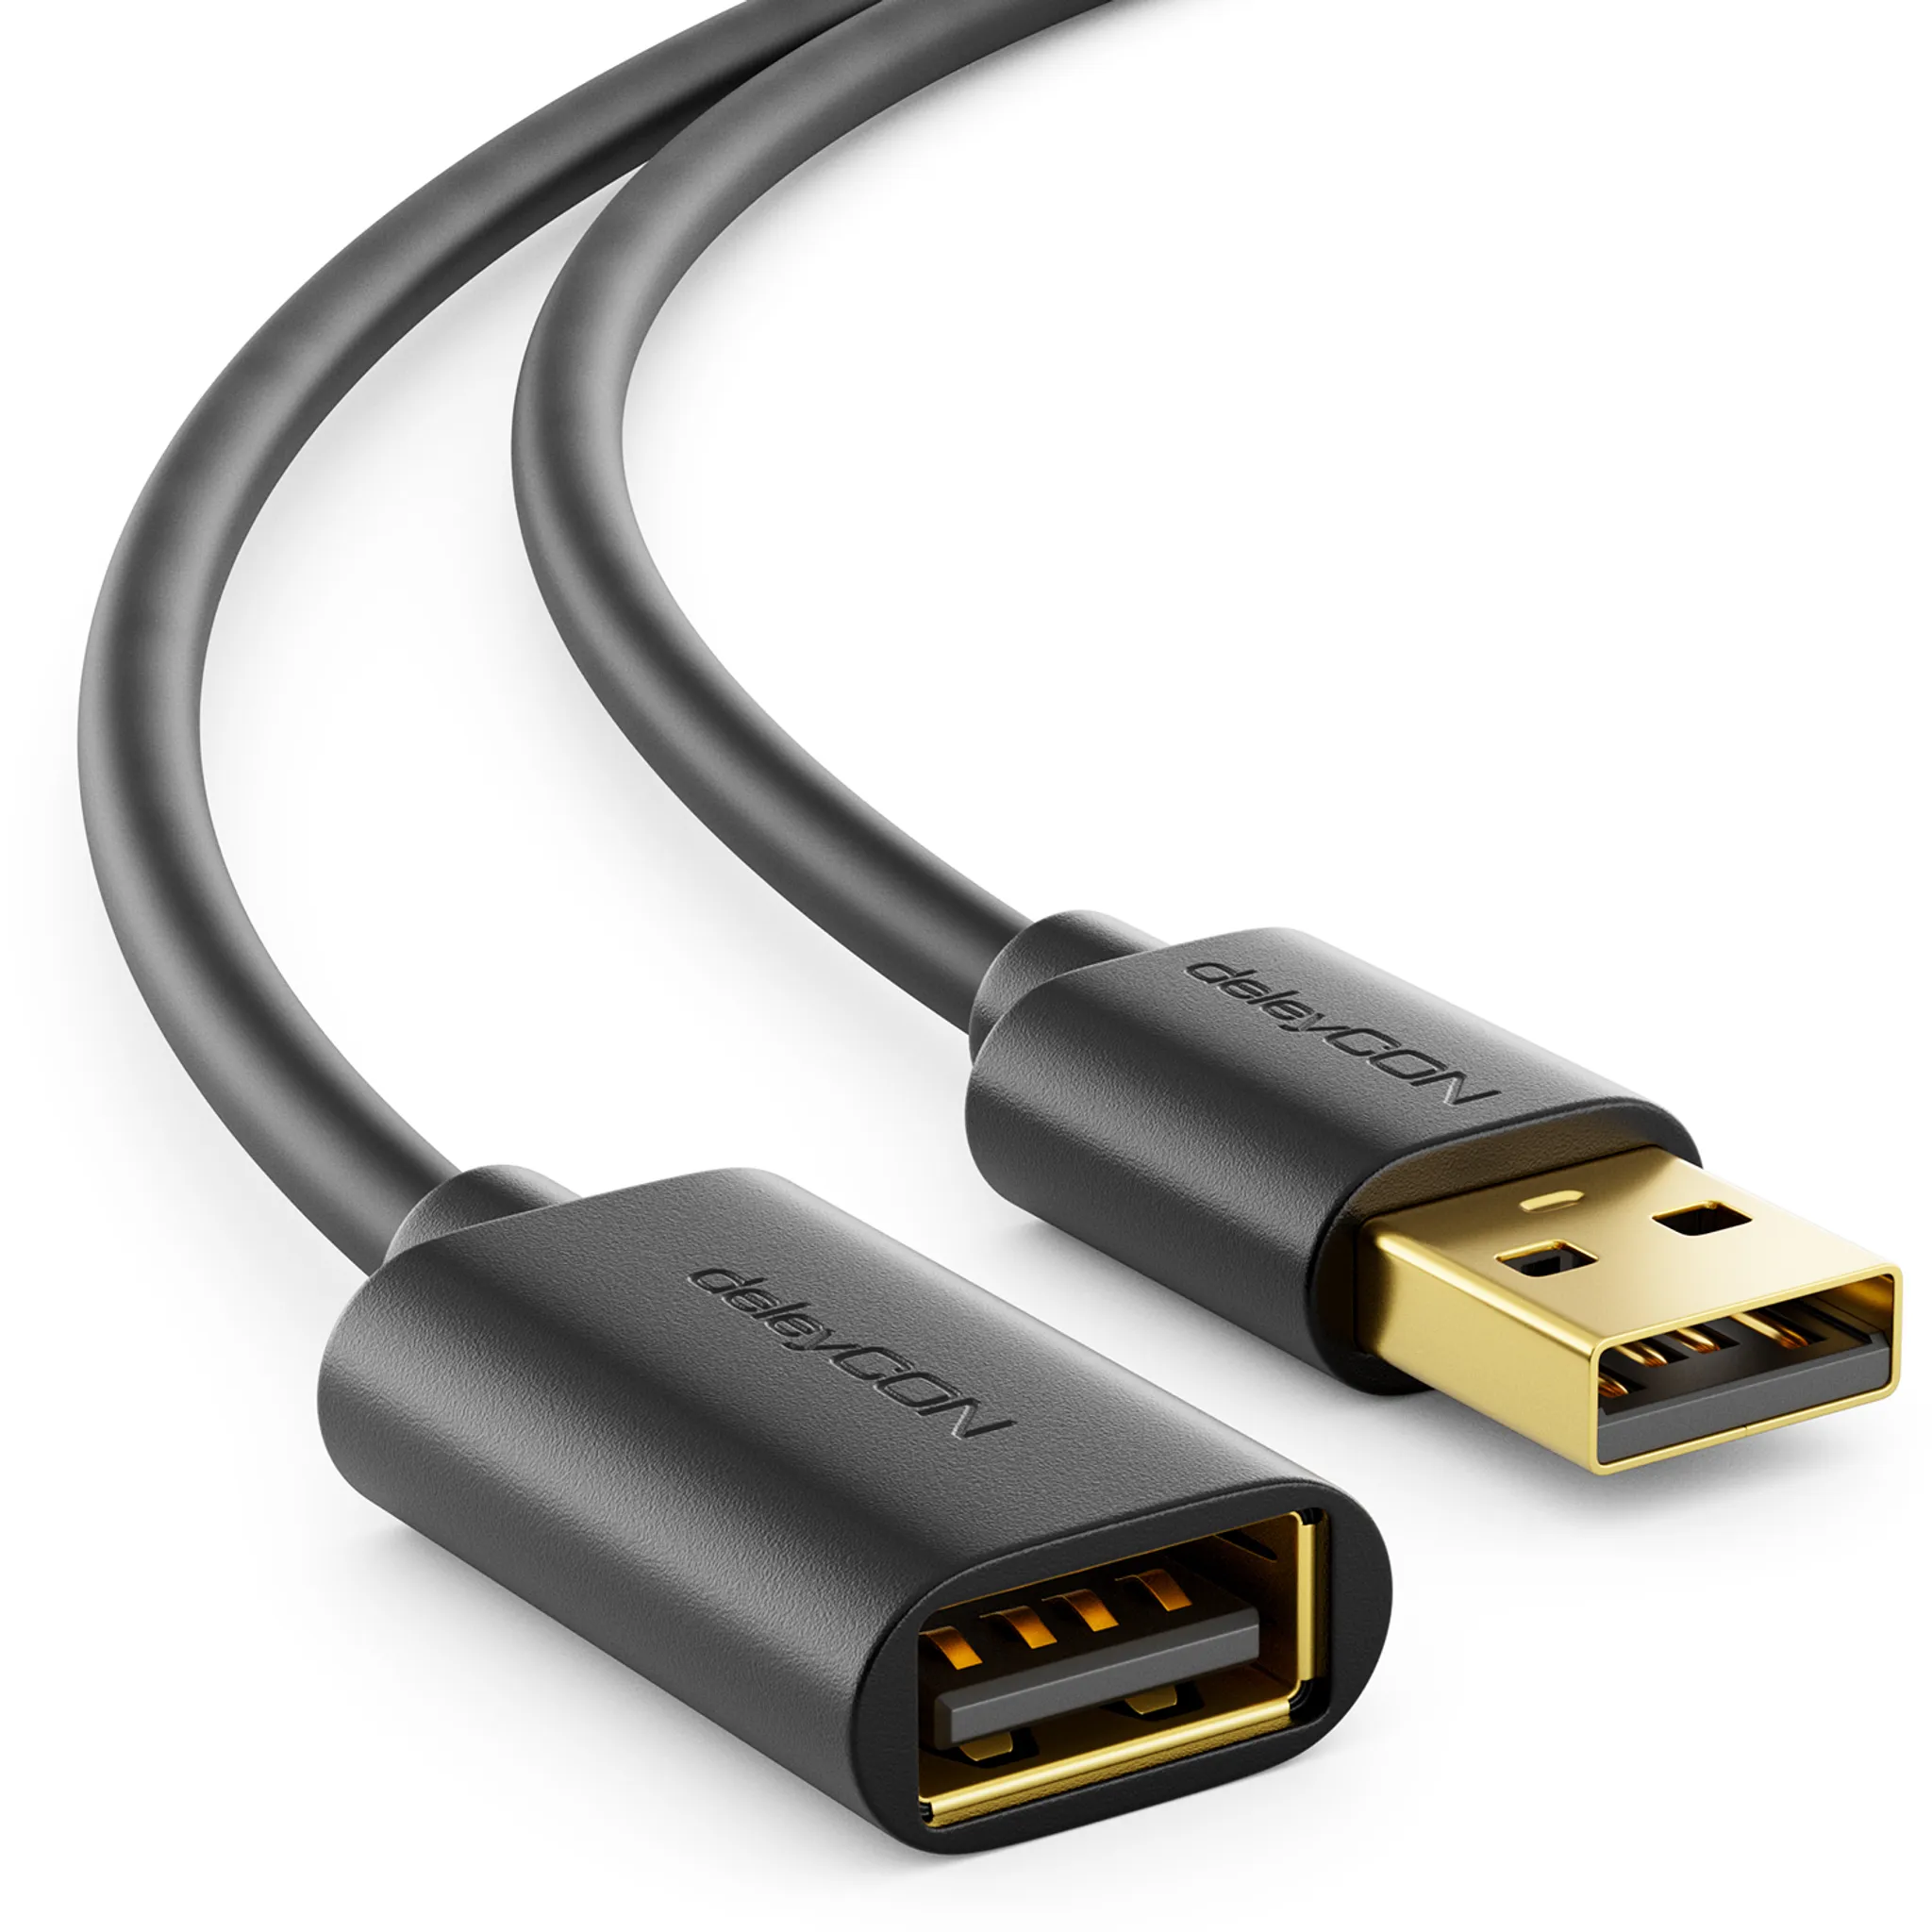 deleyCON 1,5m USB 2.0 High Speed Kabel